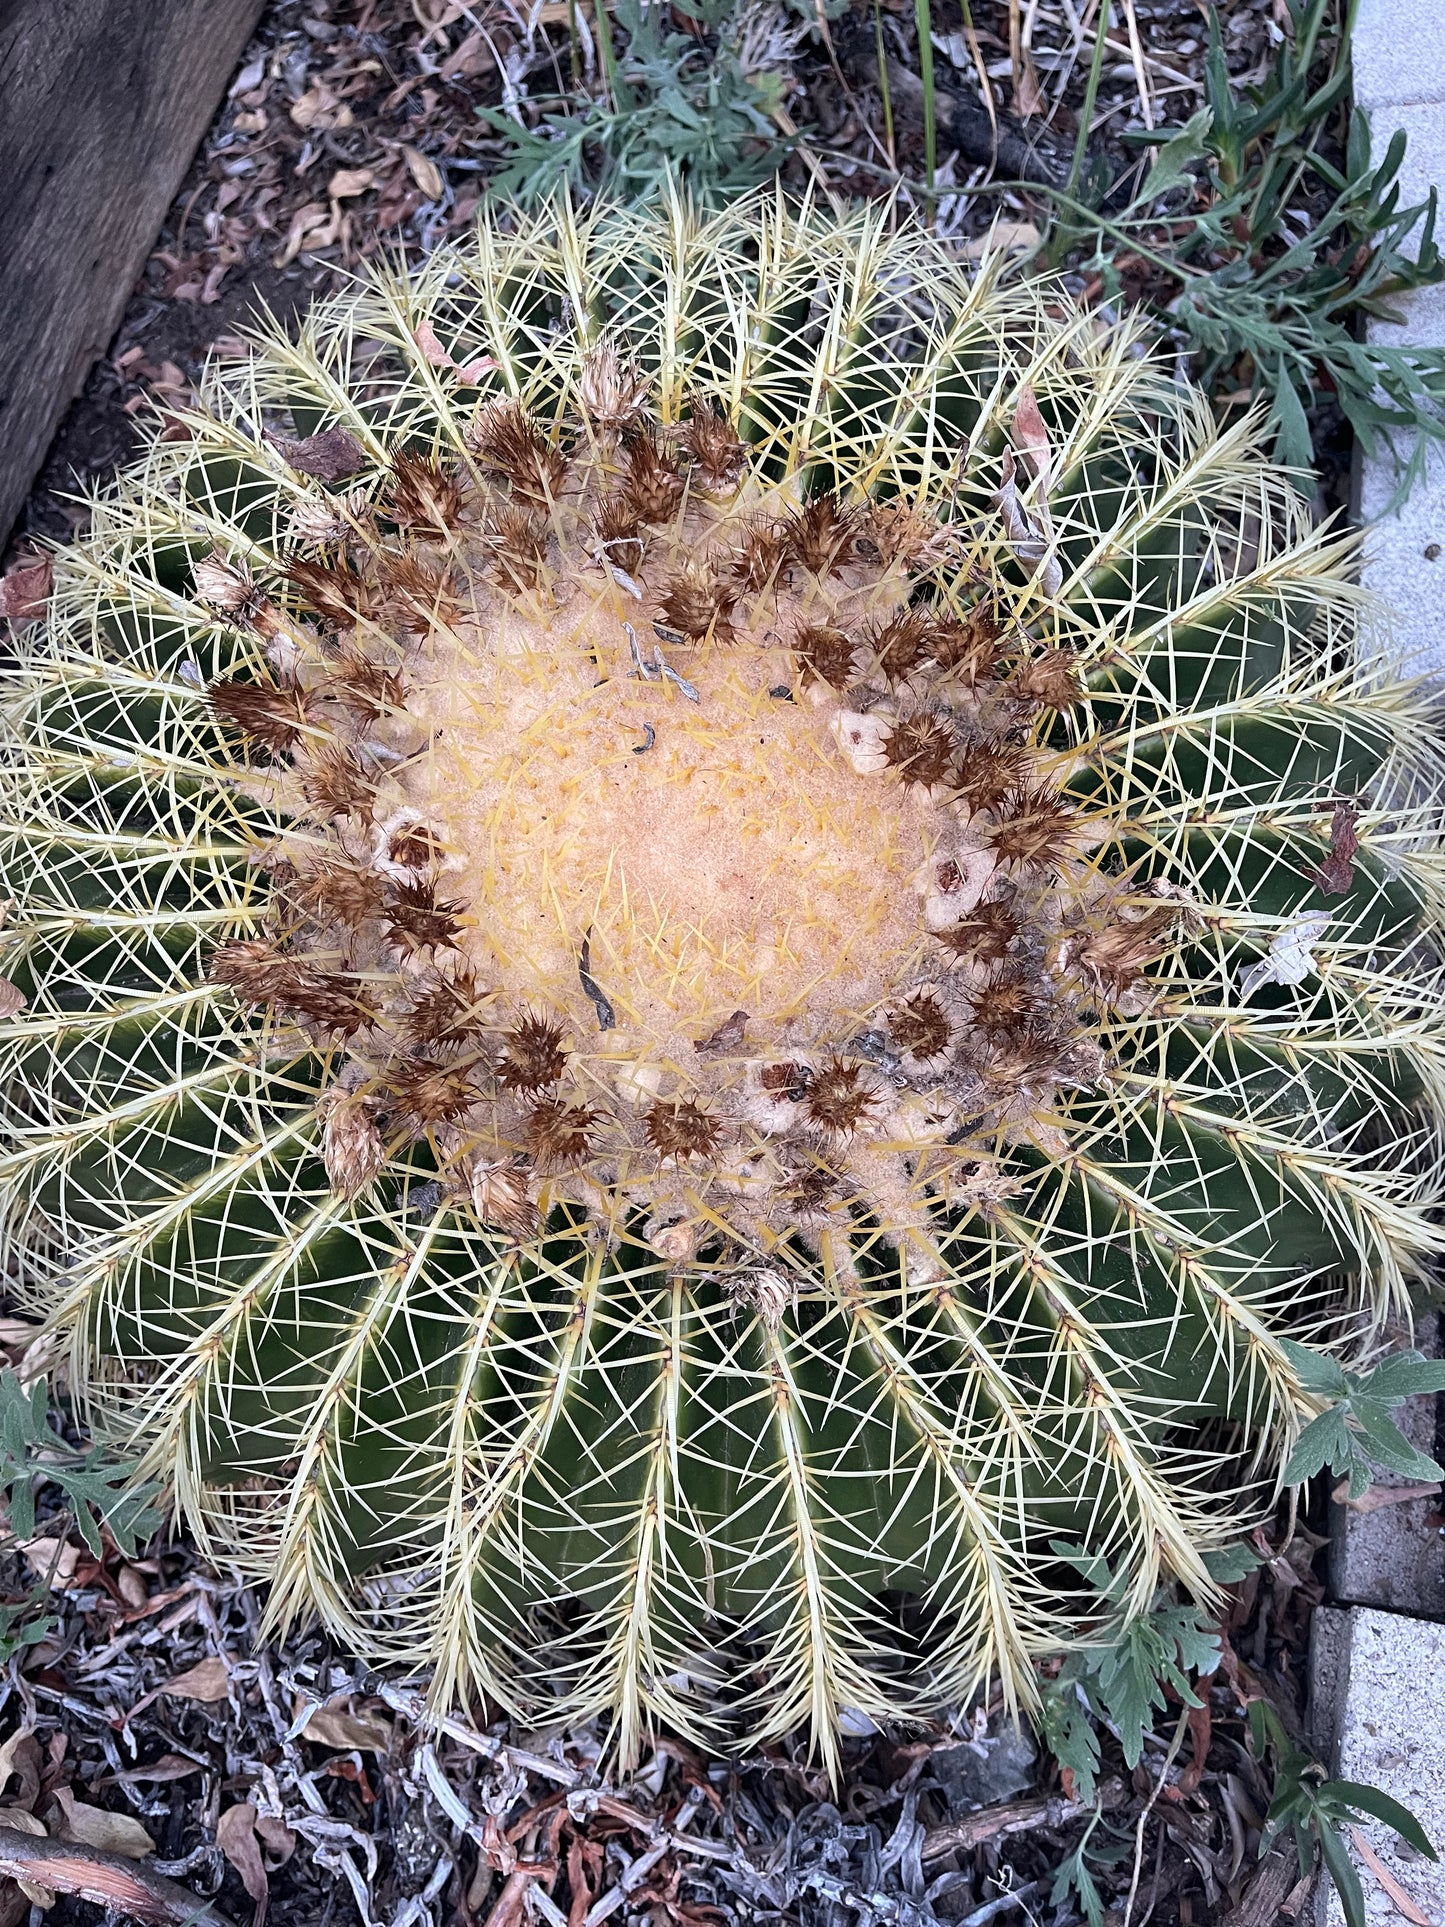 Free golden barrel cactus seeds !